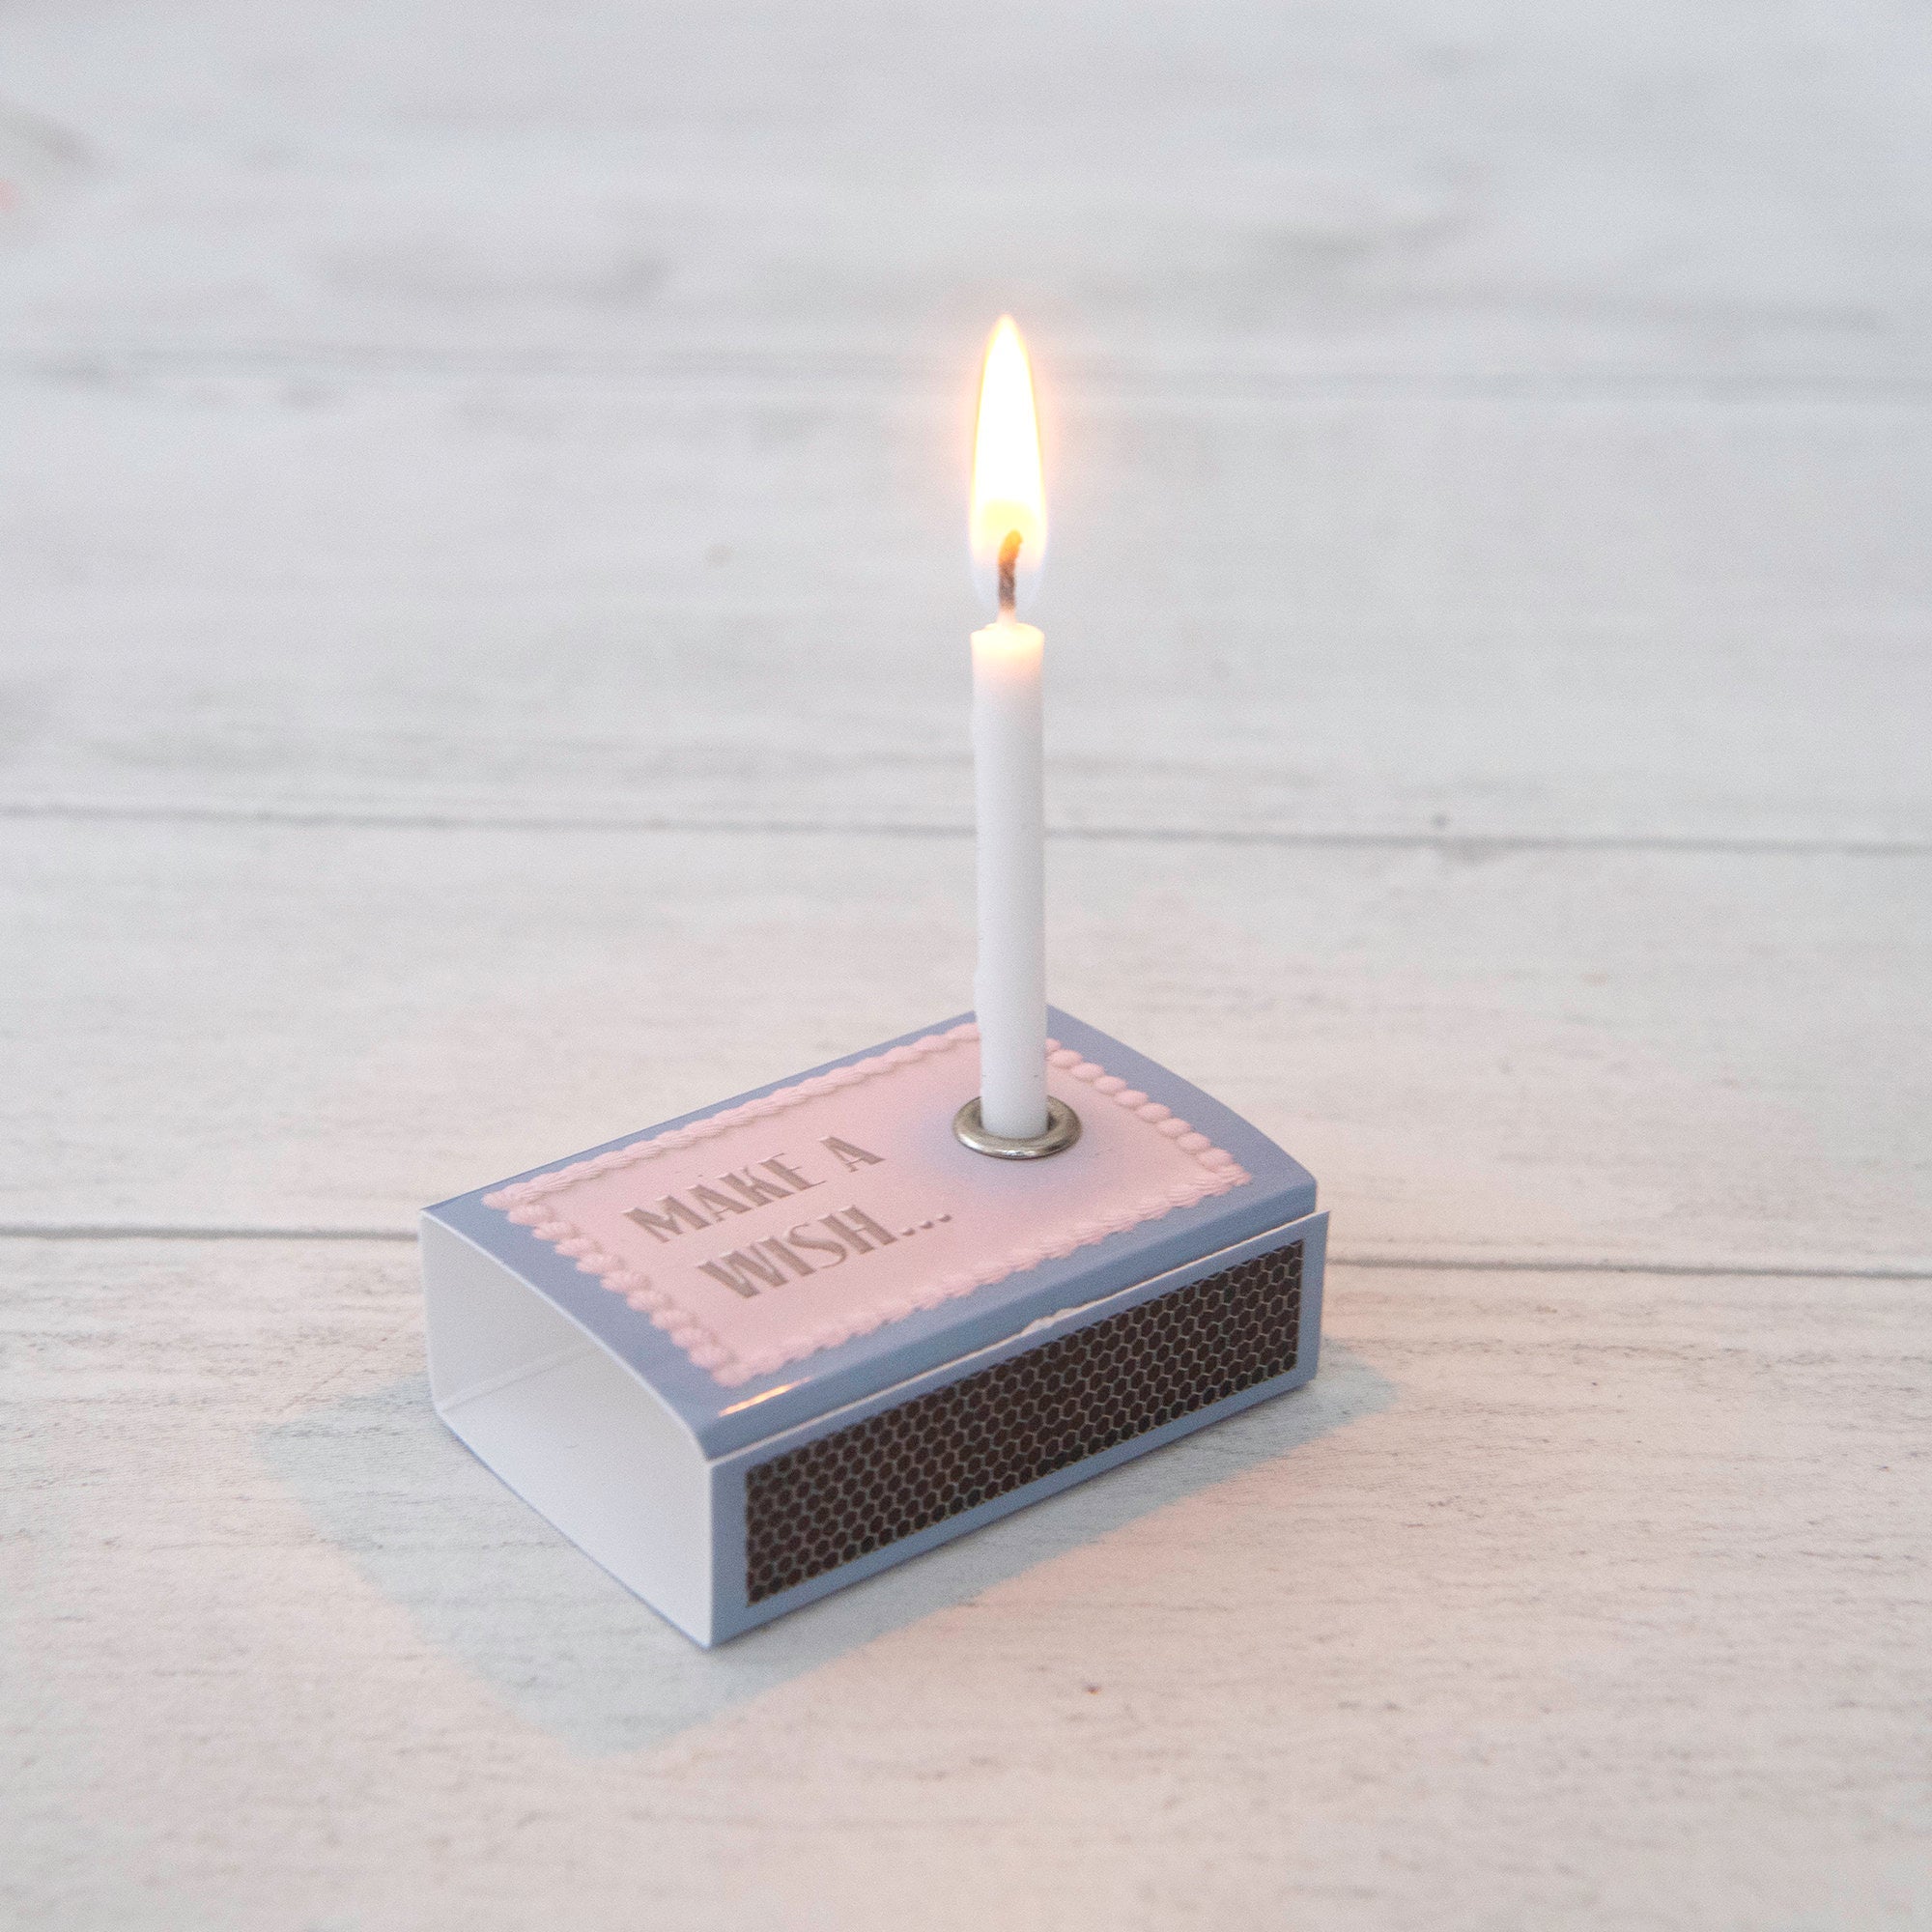 March Aquamarine Birthstone And Birthday Candle Gift